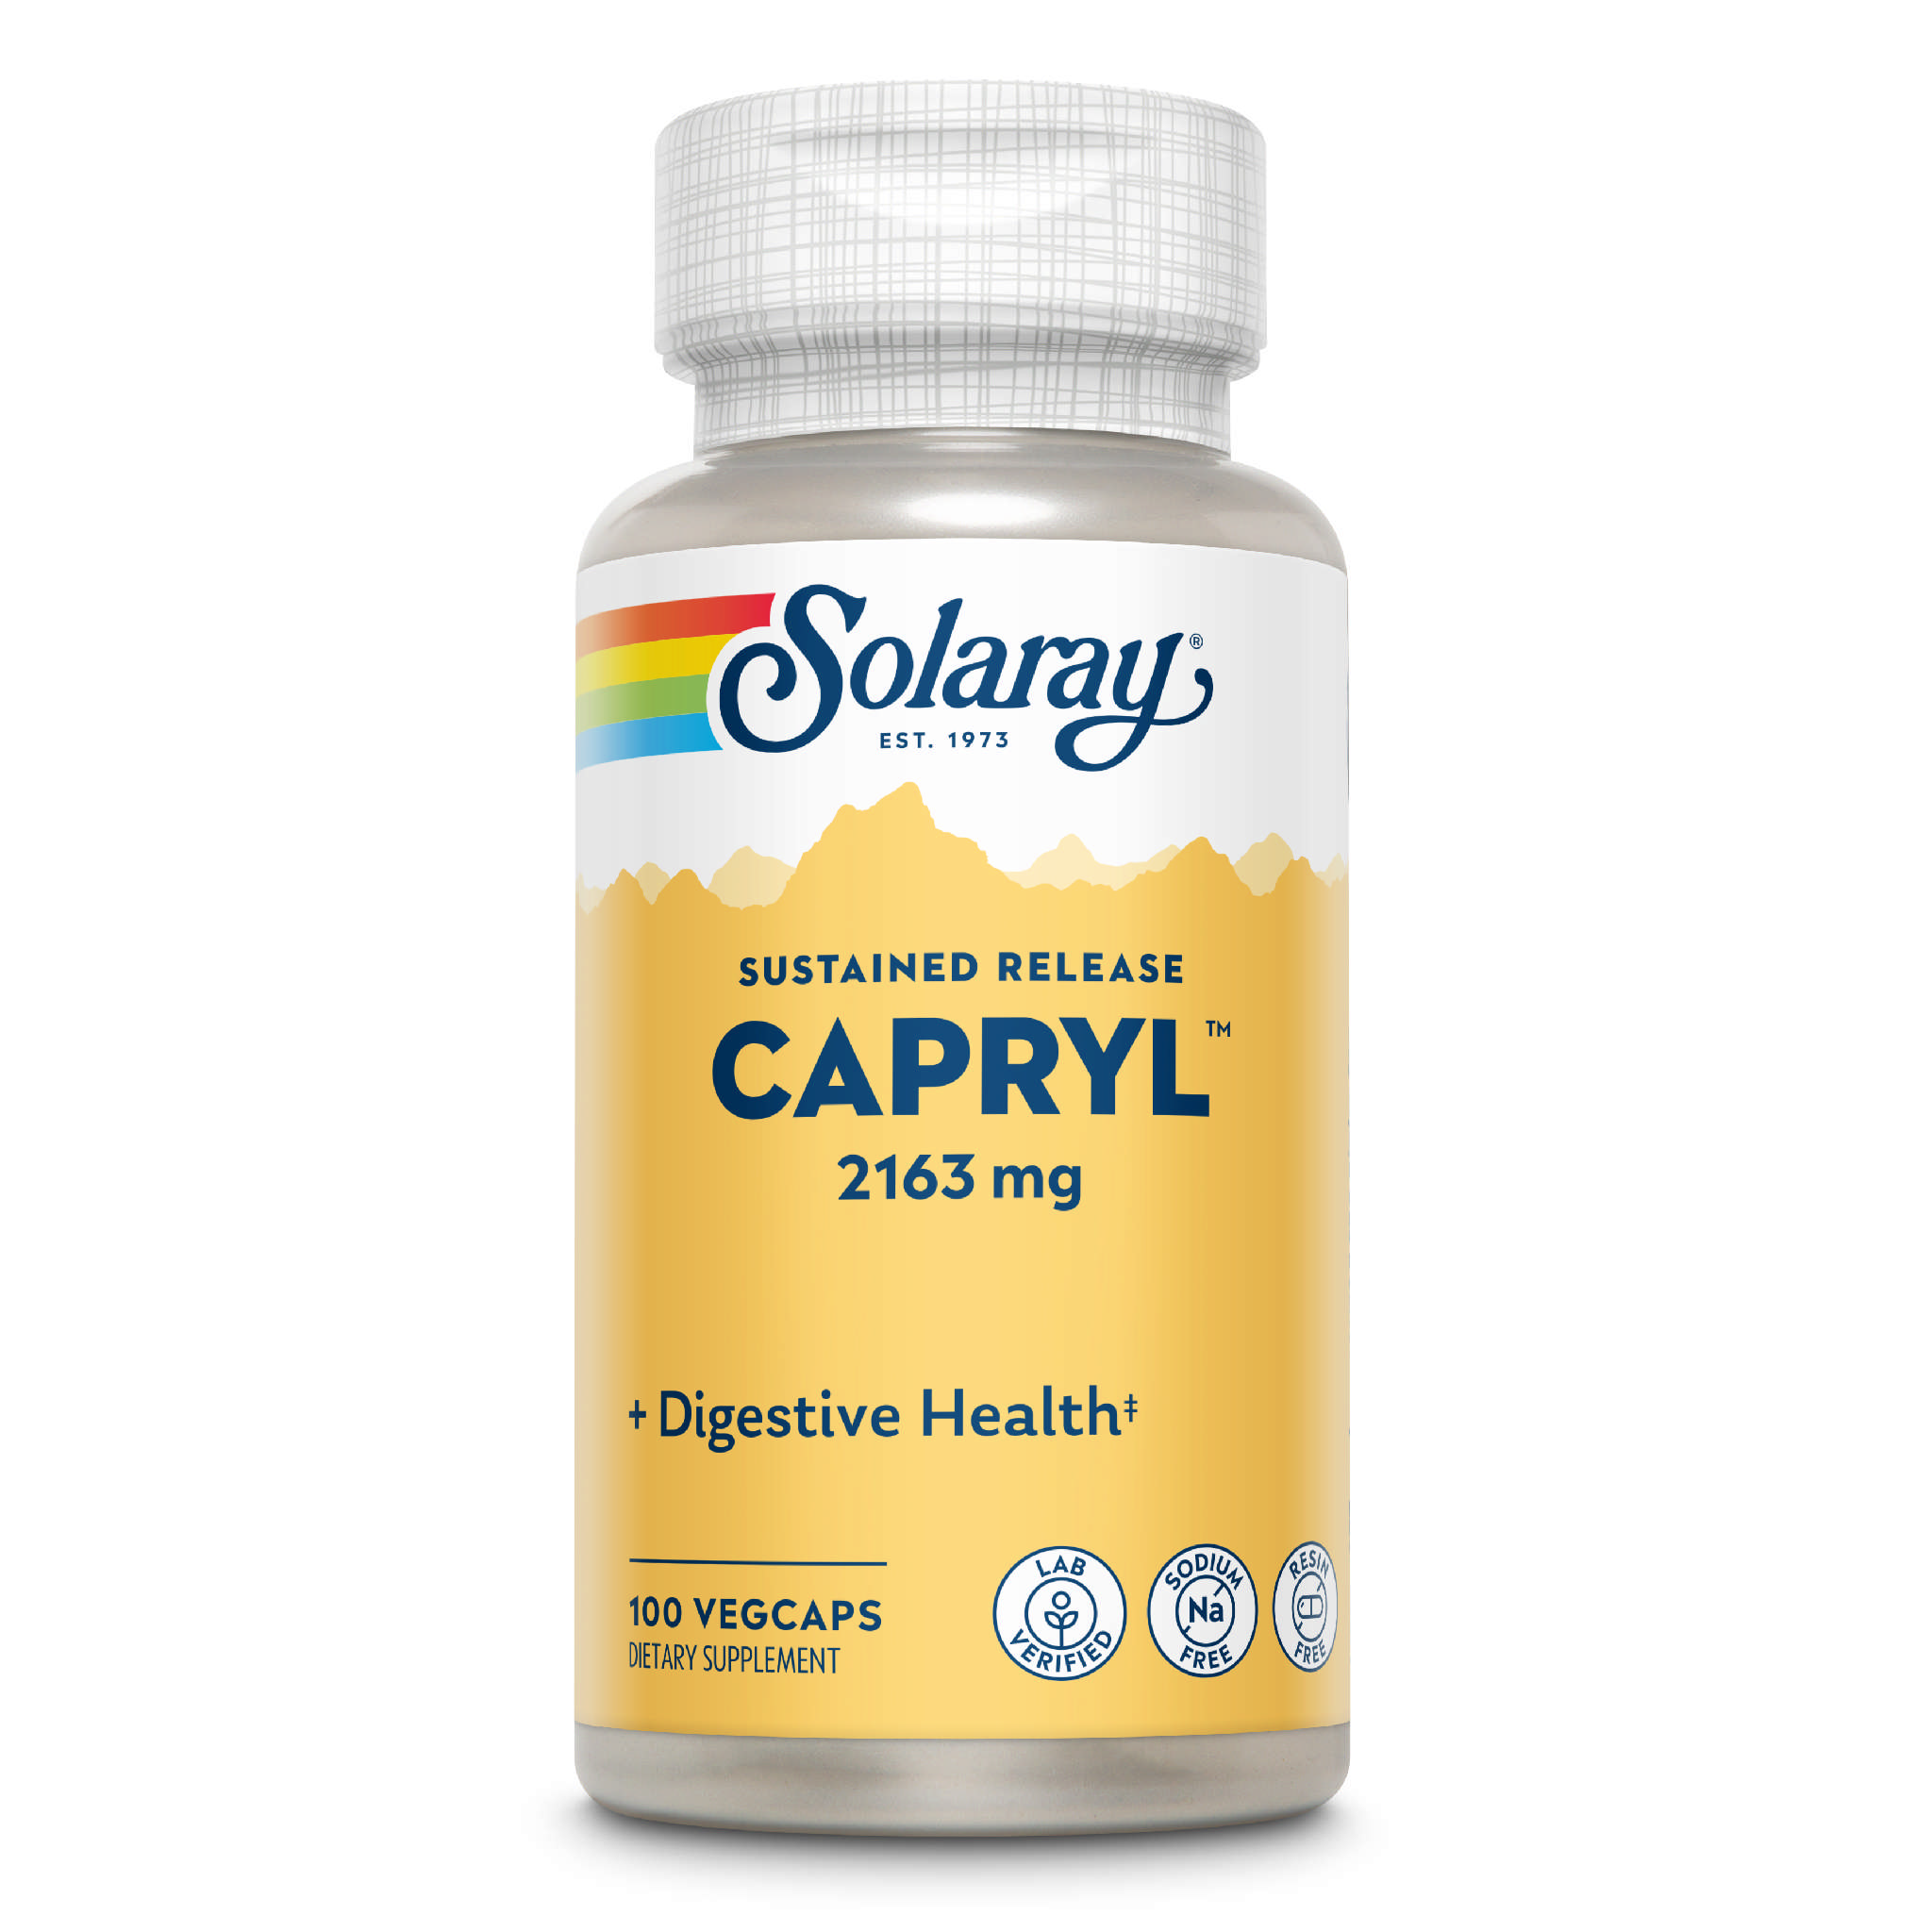 Solaray - Capryl cap